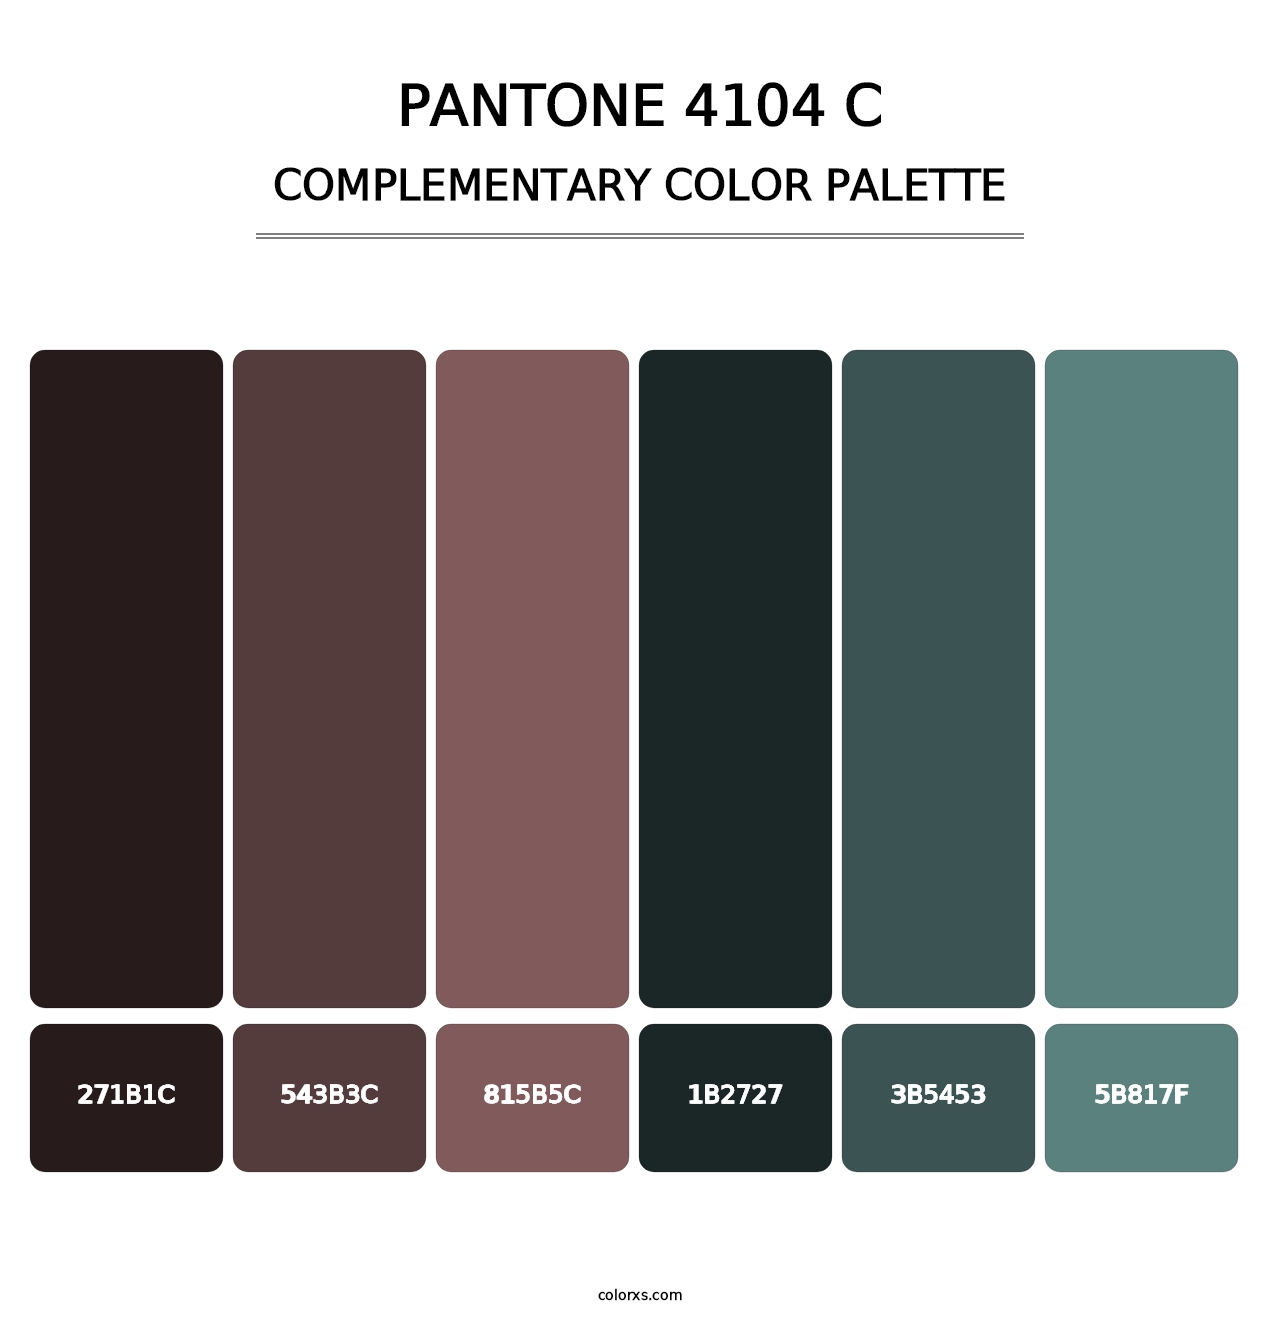 PANTONE 4104 C - Complementary Color Palette